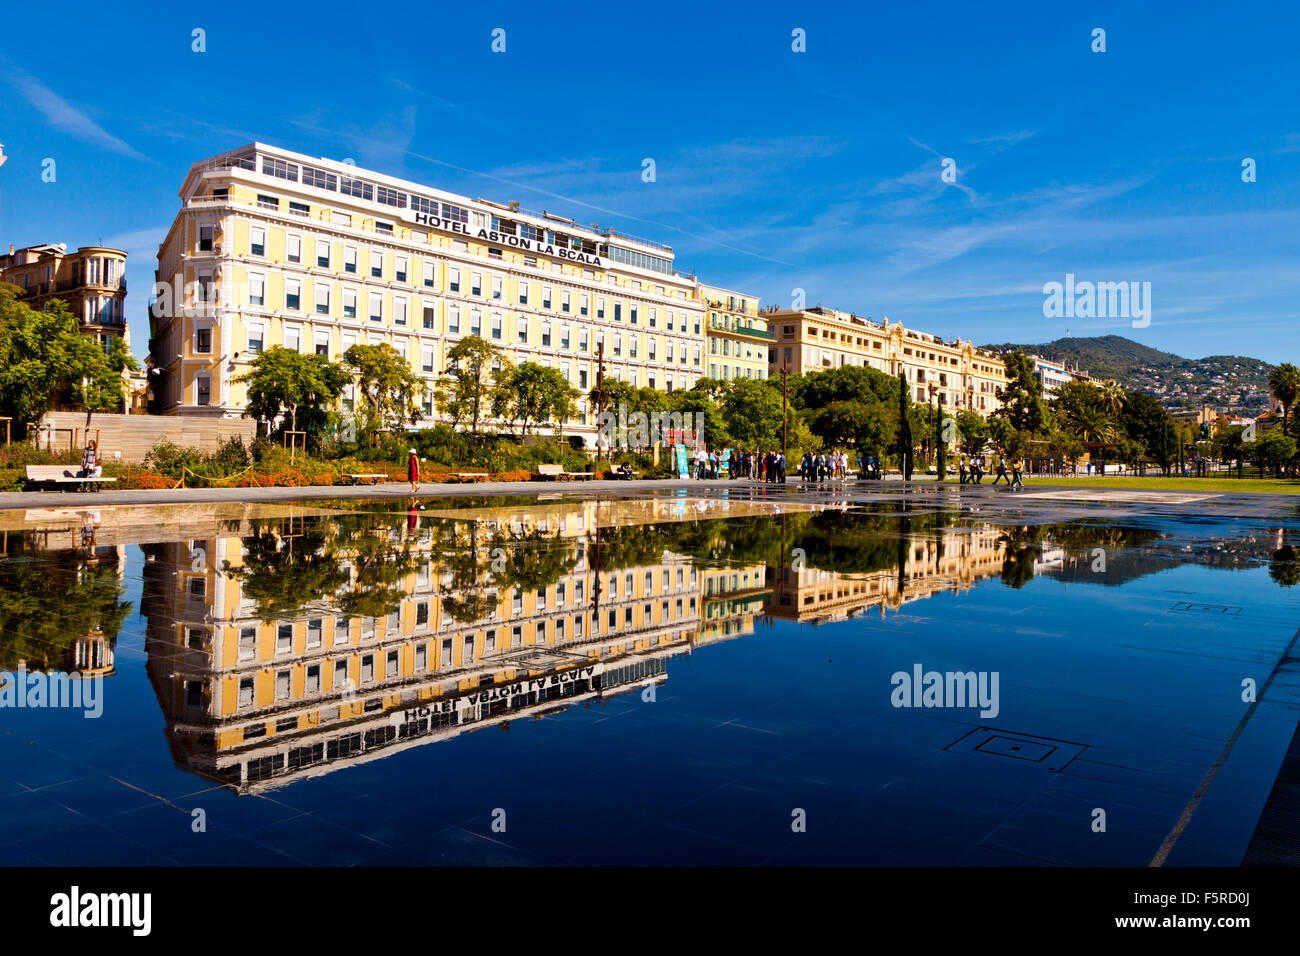 Hotel Aston La Scala reflected in the Miroir d'eau Nice France Stock Photo  - Alamy